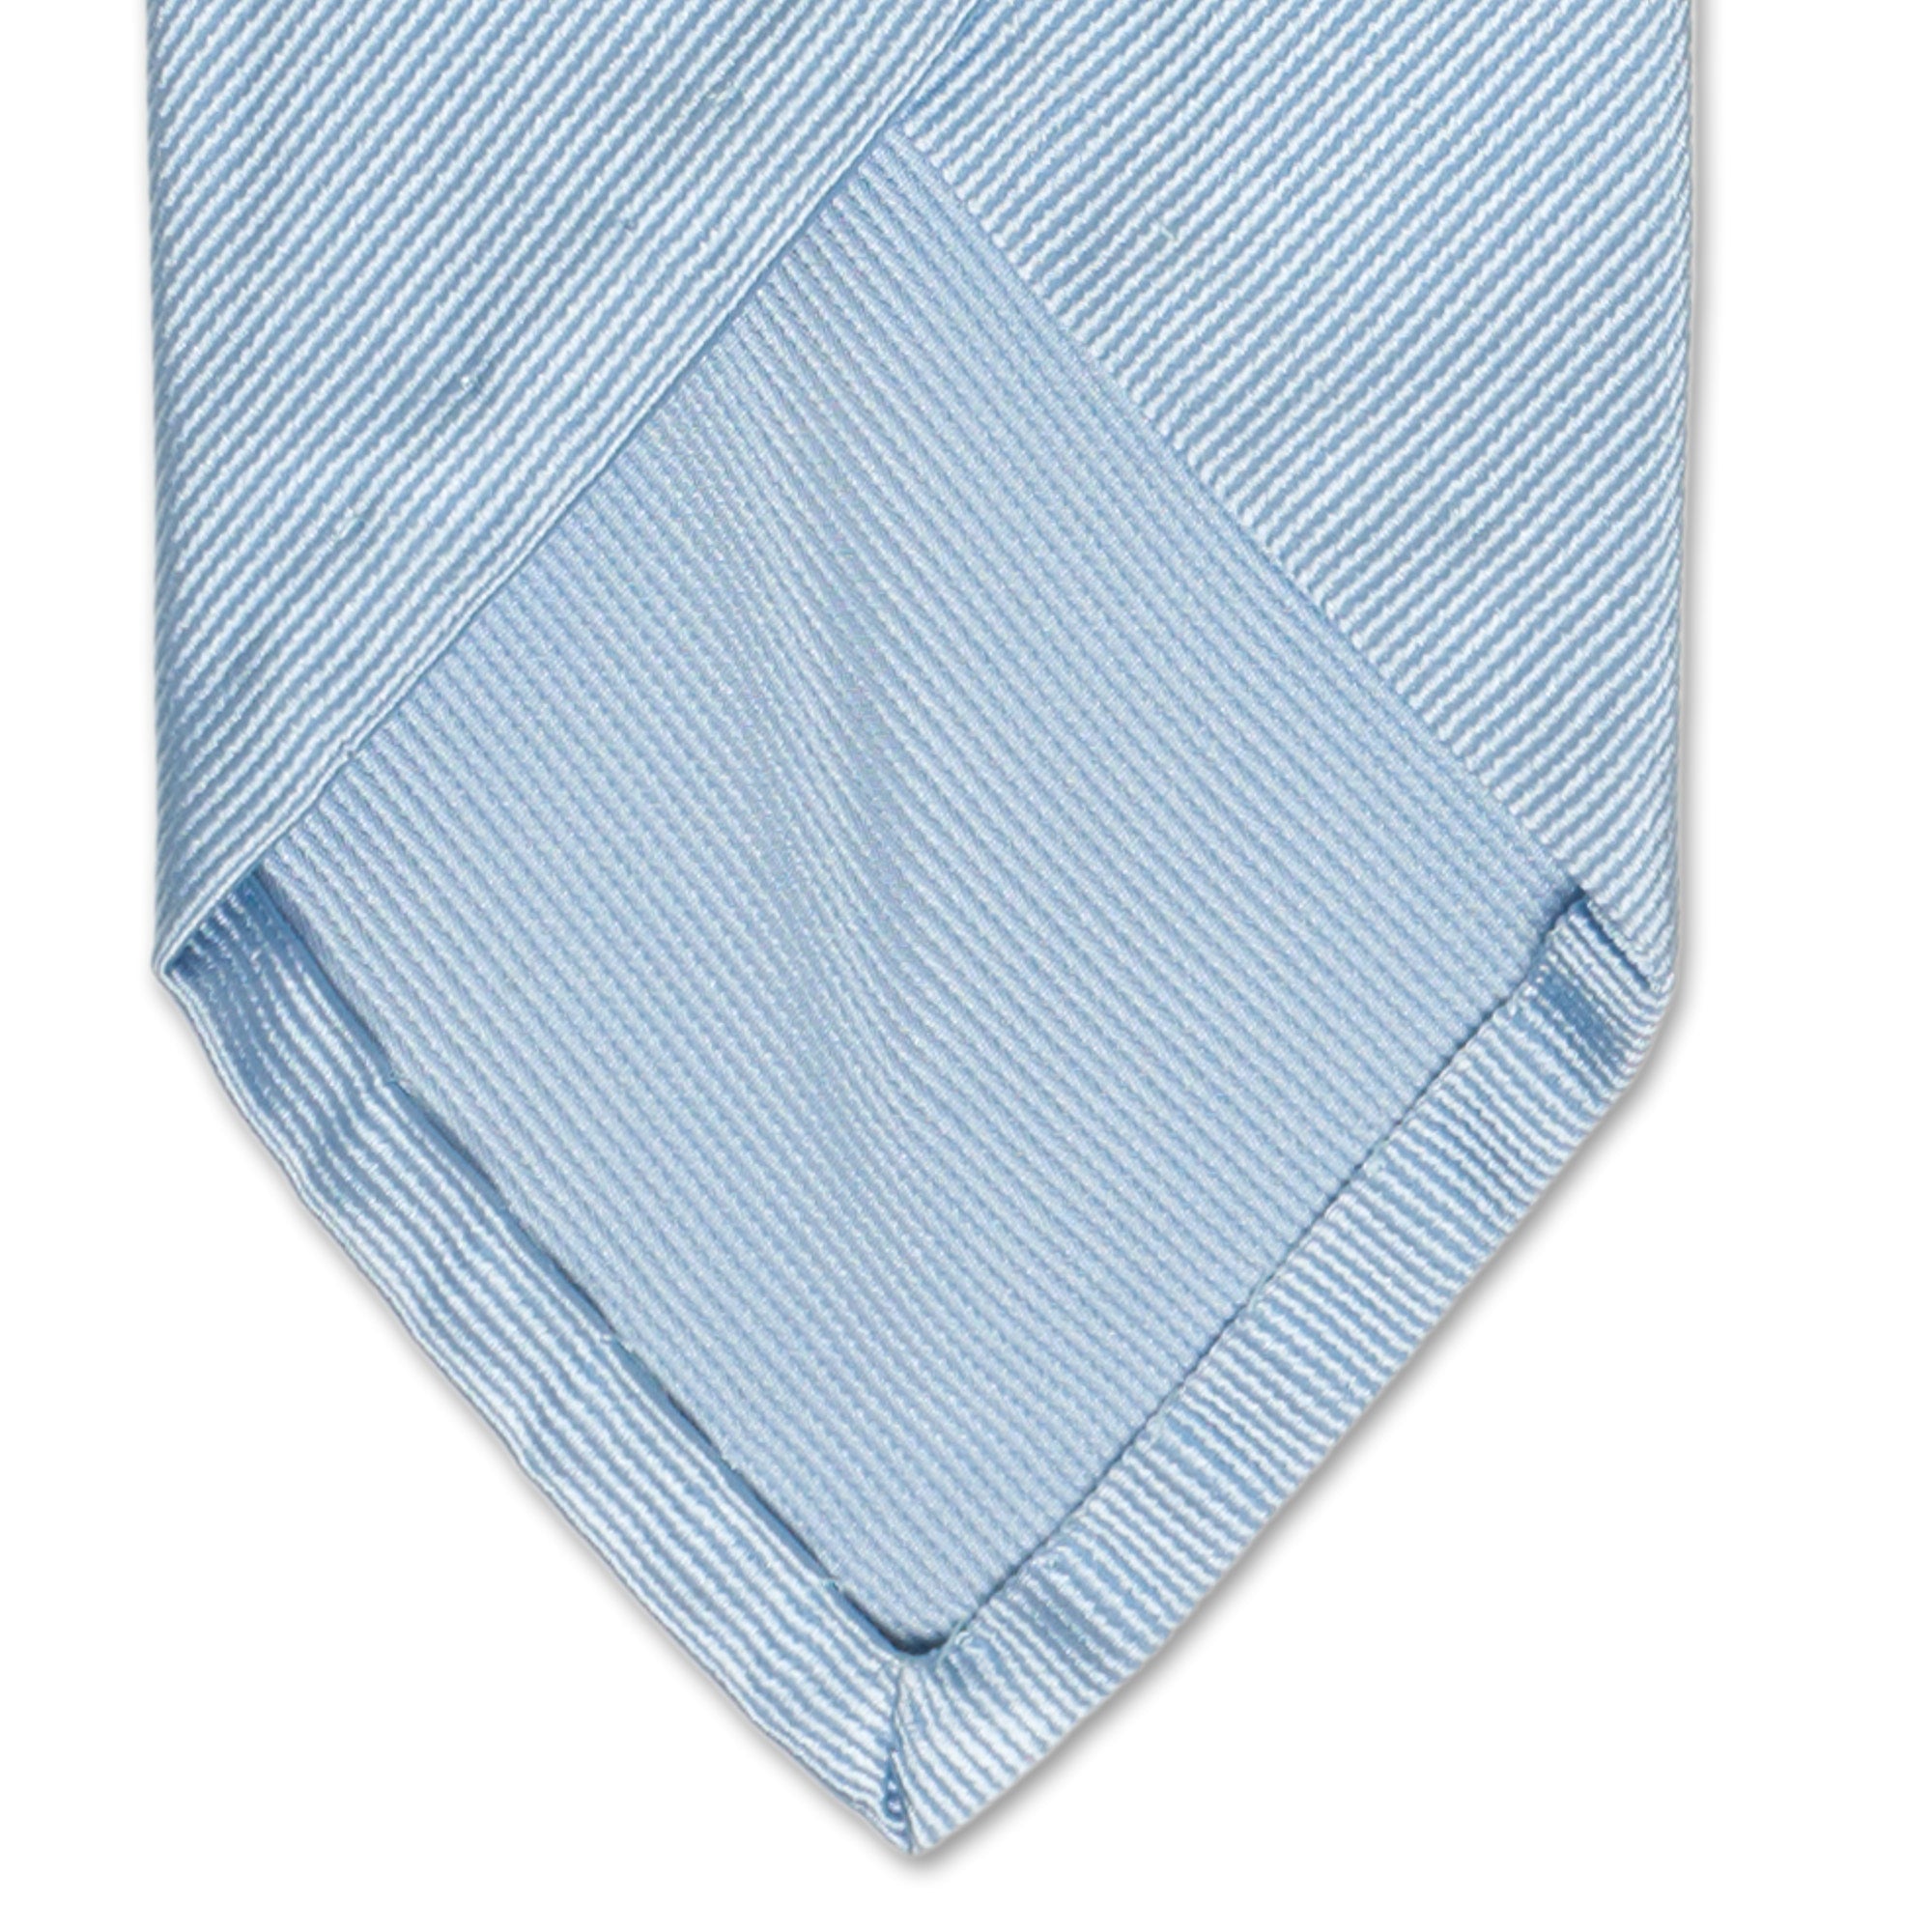 GIUSTO Bespoke Handmade Blue Striped Silk Seven Fold Unlined Tie GIUSTO